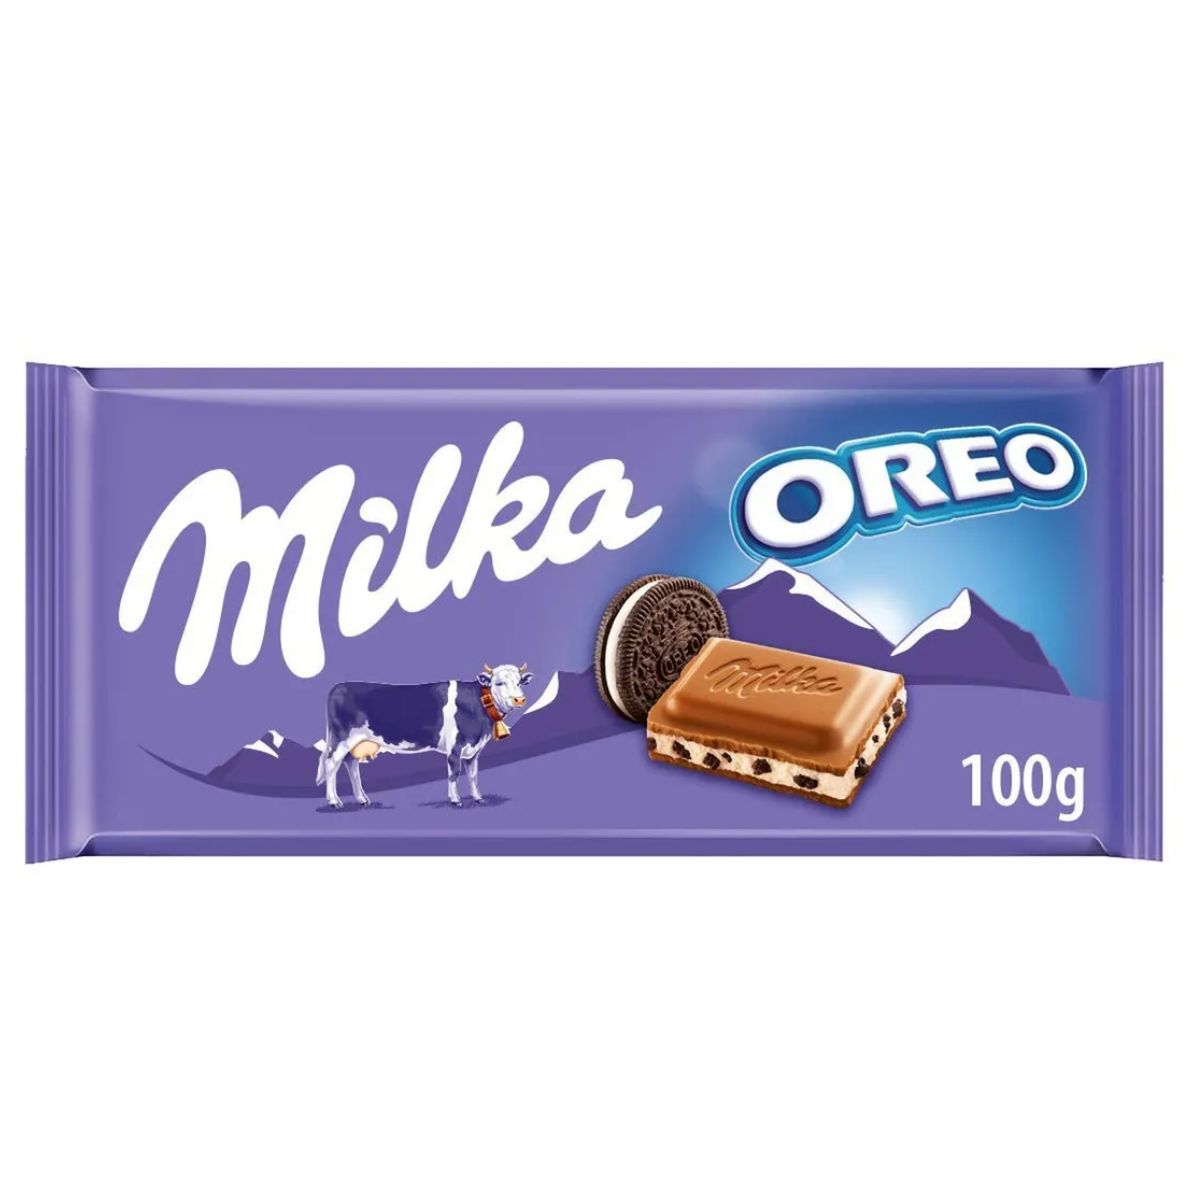 Milka - Oreo Chocolate Biscuit - 100g bar.